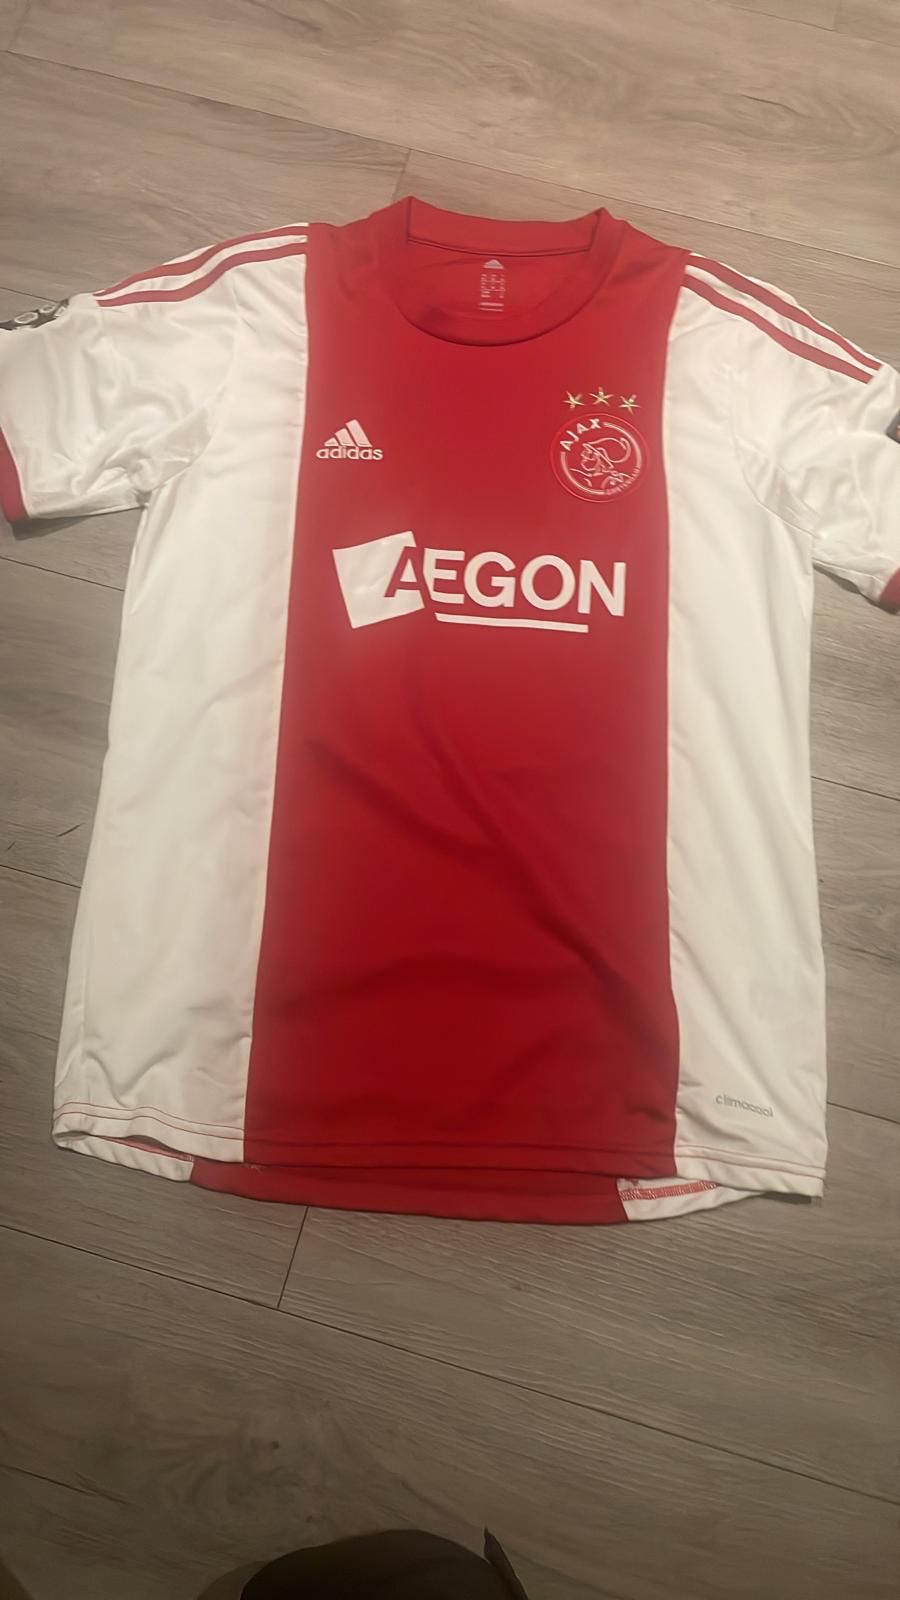 Ajax: Davy Klaassen